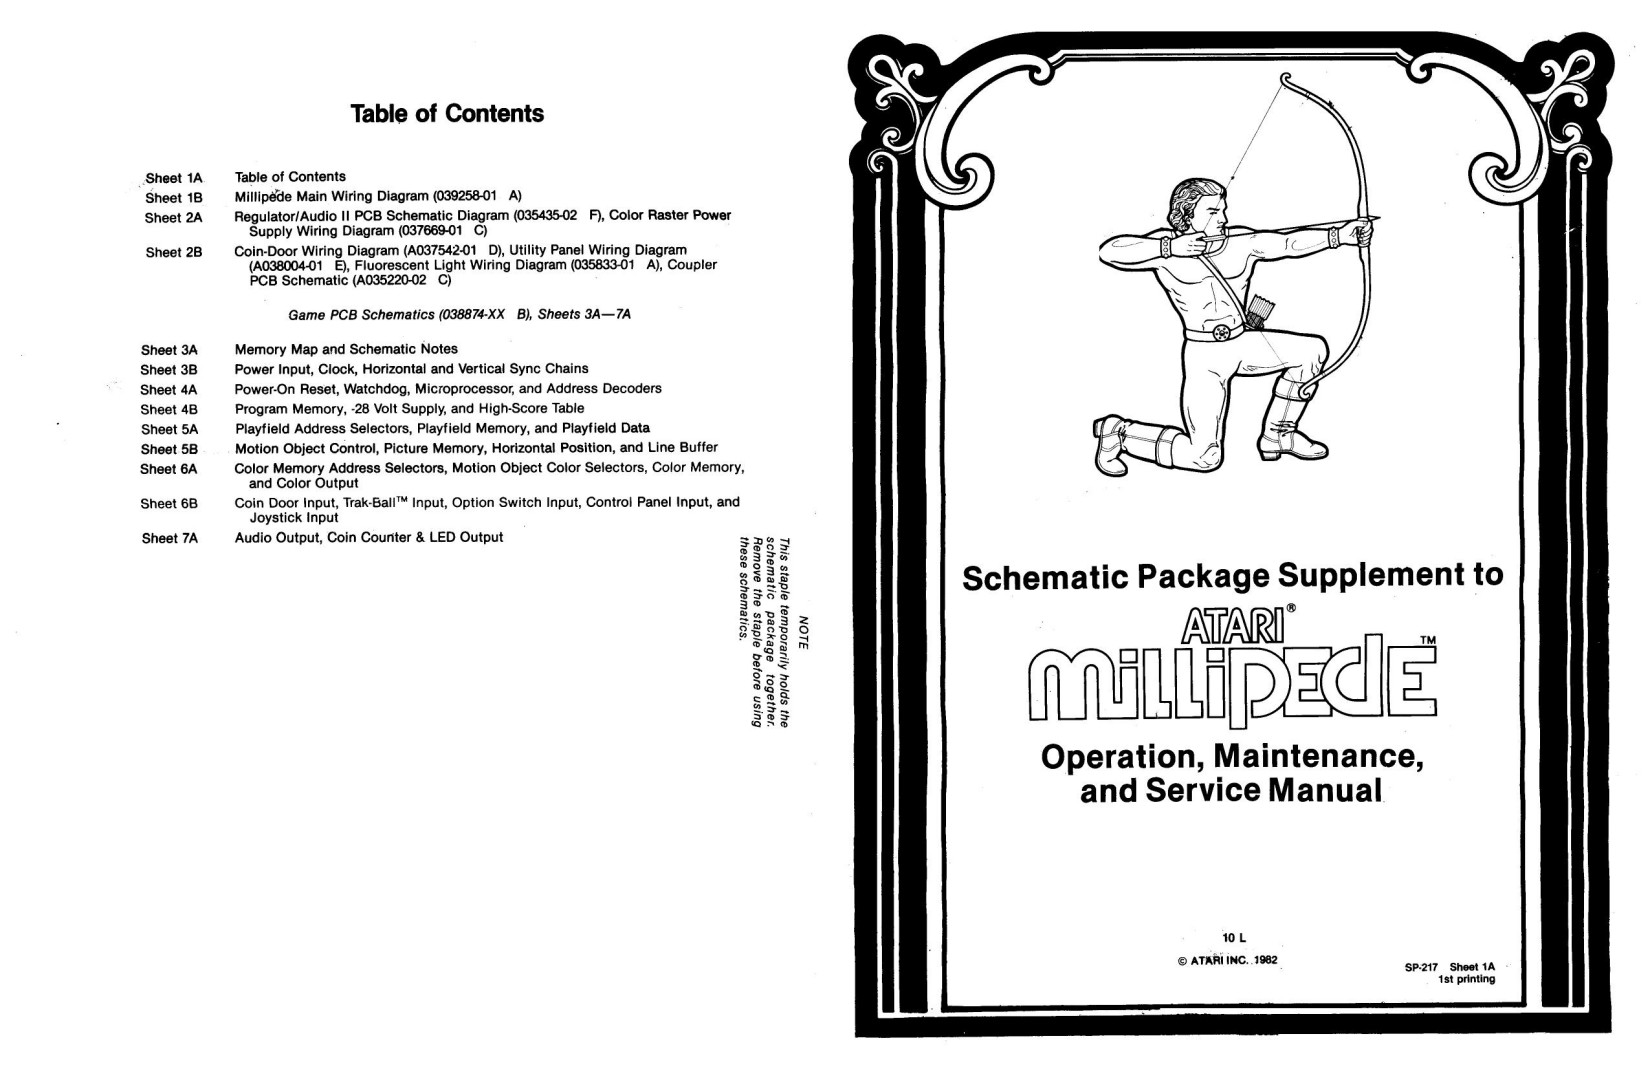 Millipede SP-217 1st Printing